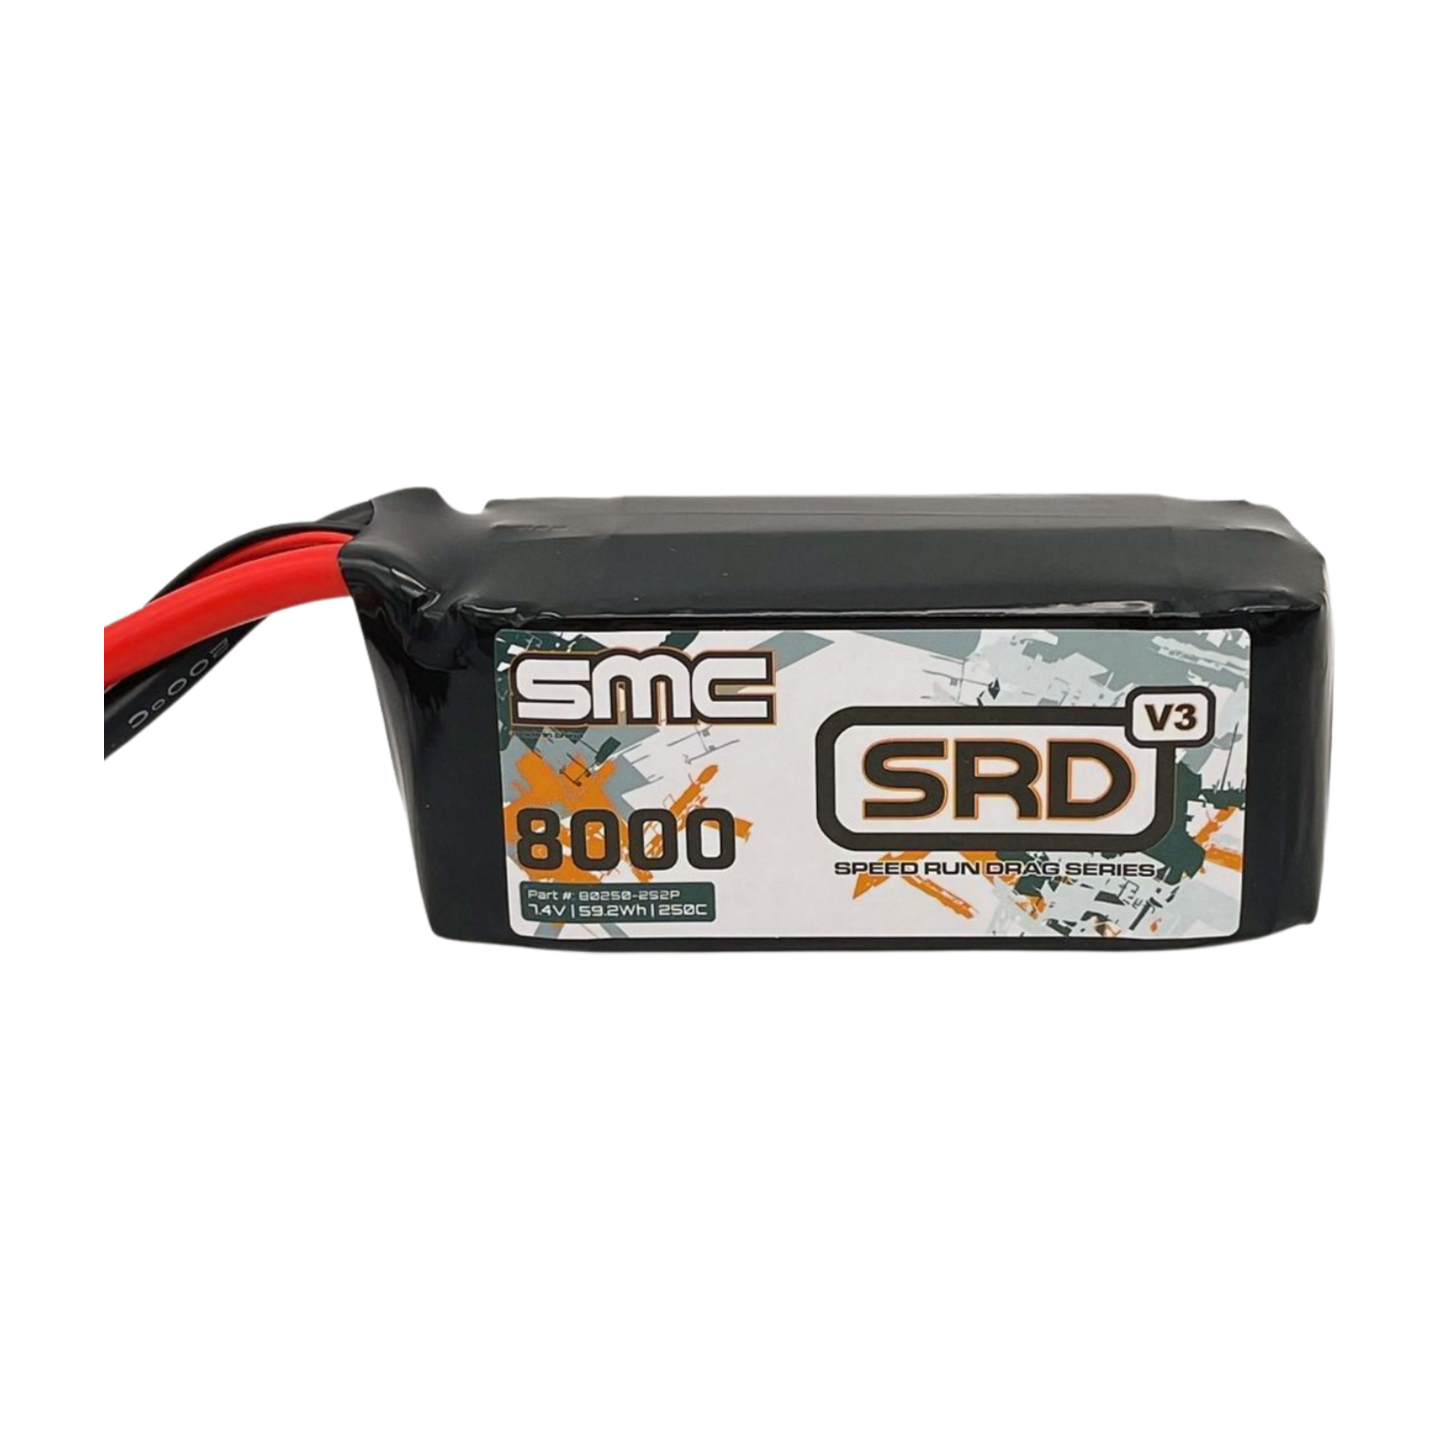 SMC SRD-V3 2S 7.4V 8000mAh 250C Shorty Softcase Drag Racing LiPo Battery